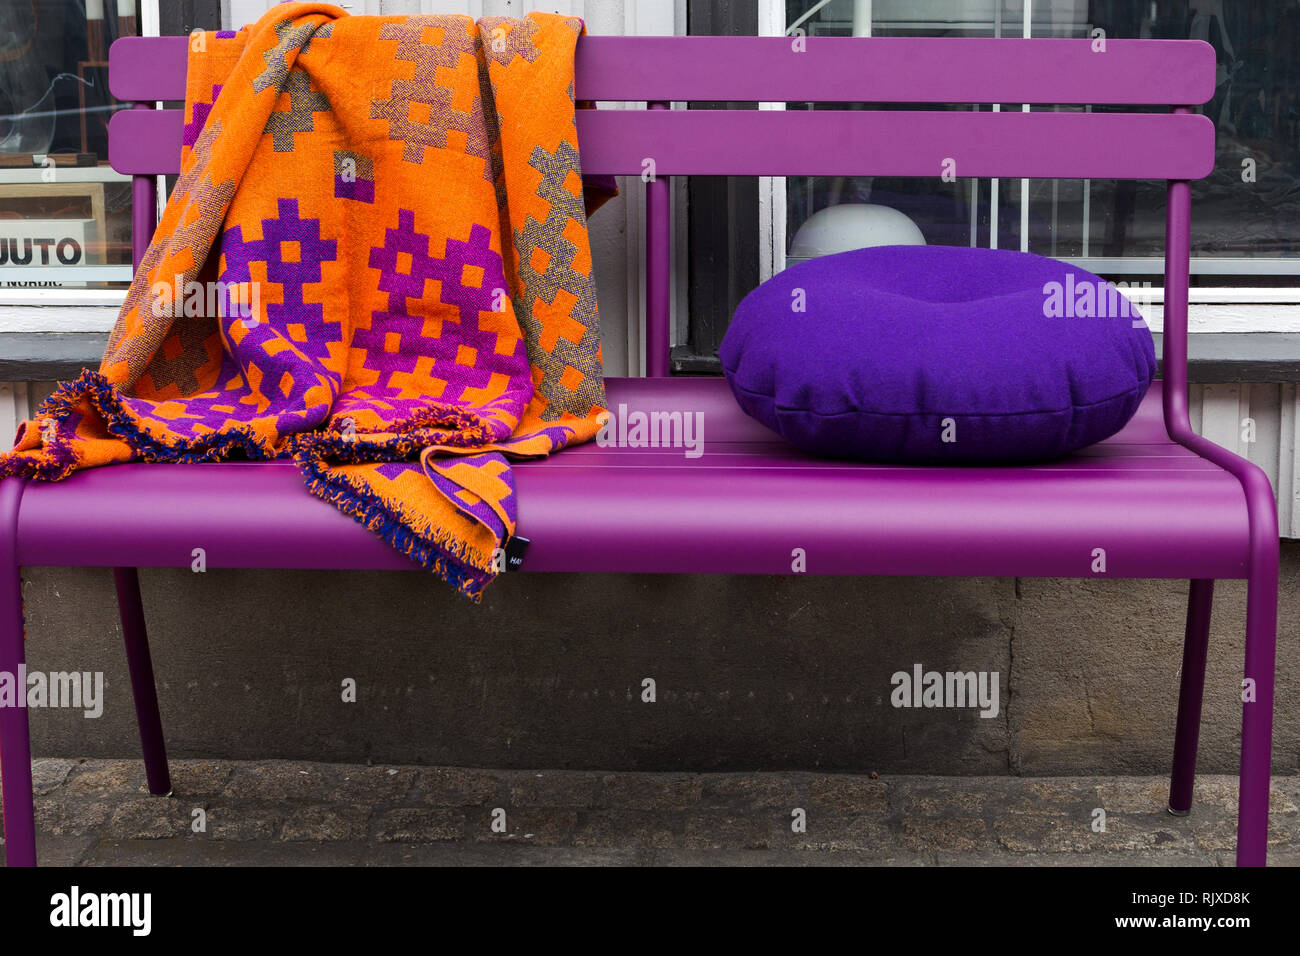 Decorated Purple bench Stock Photo